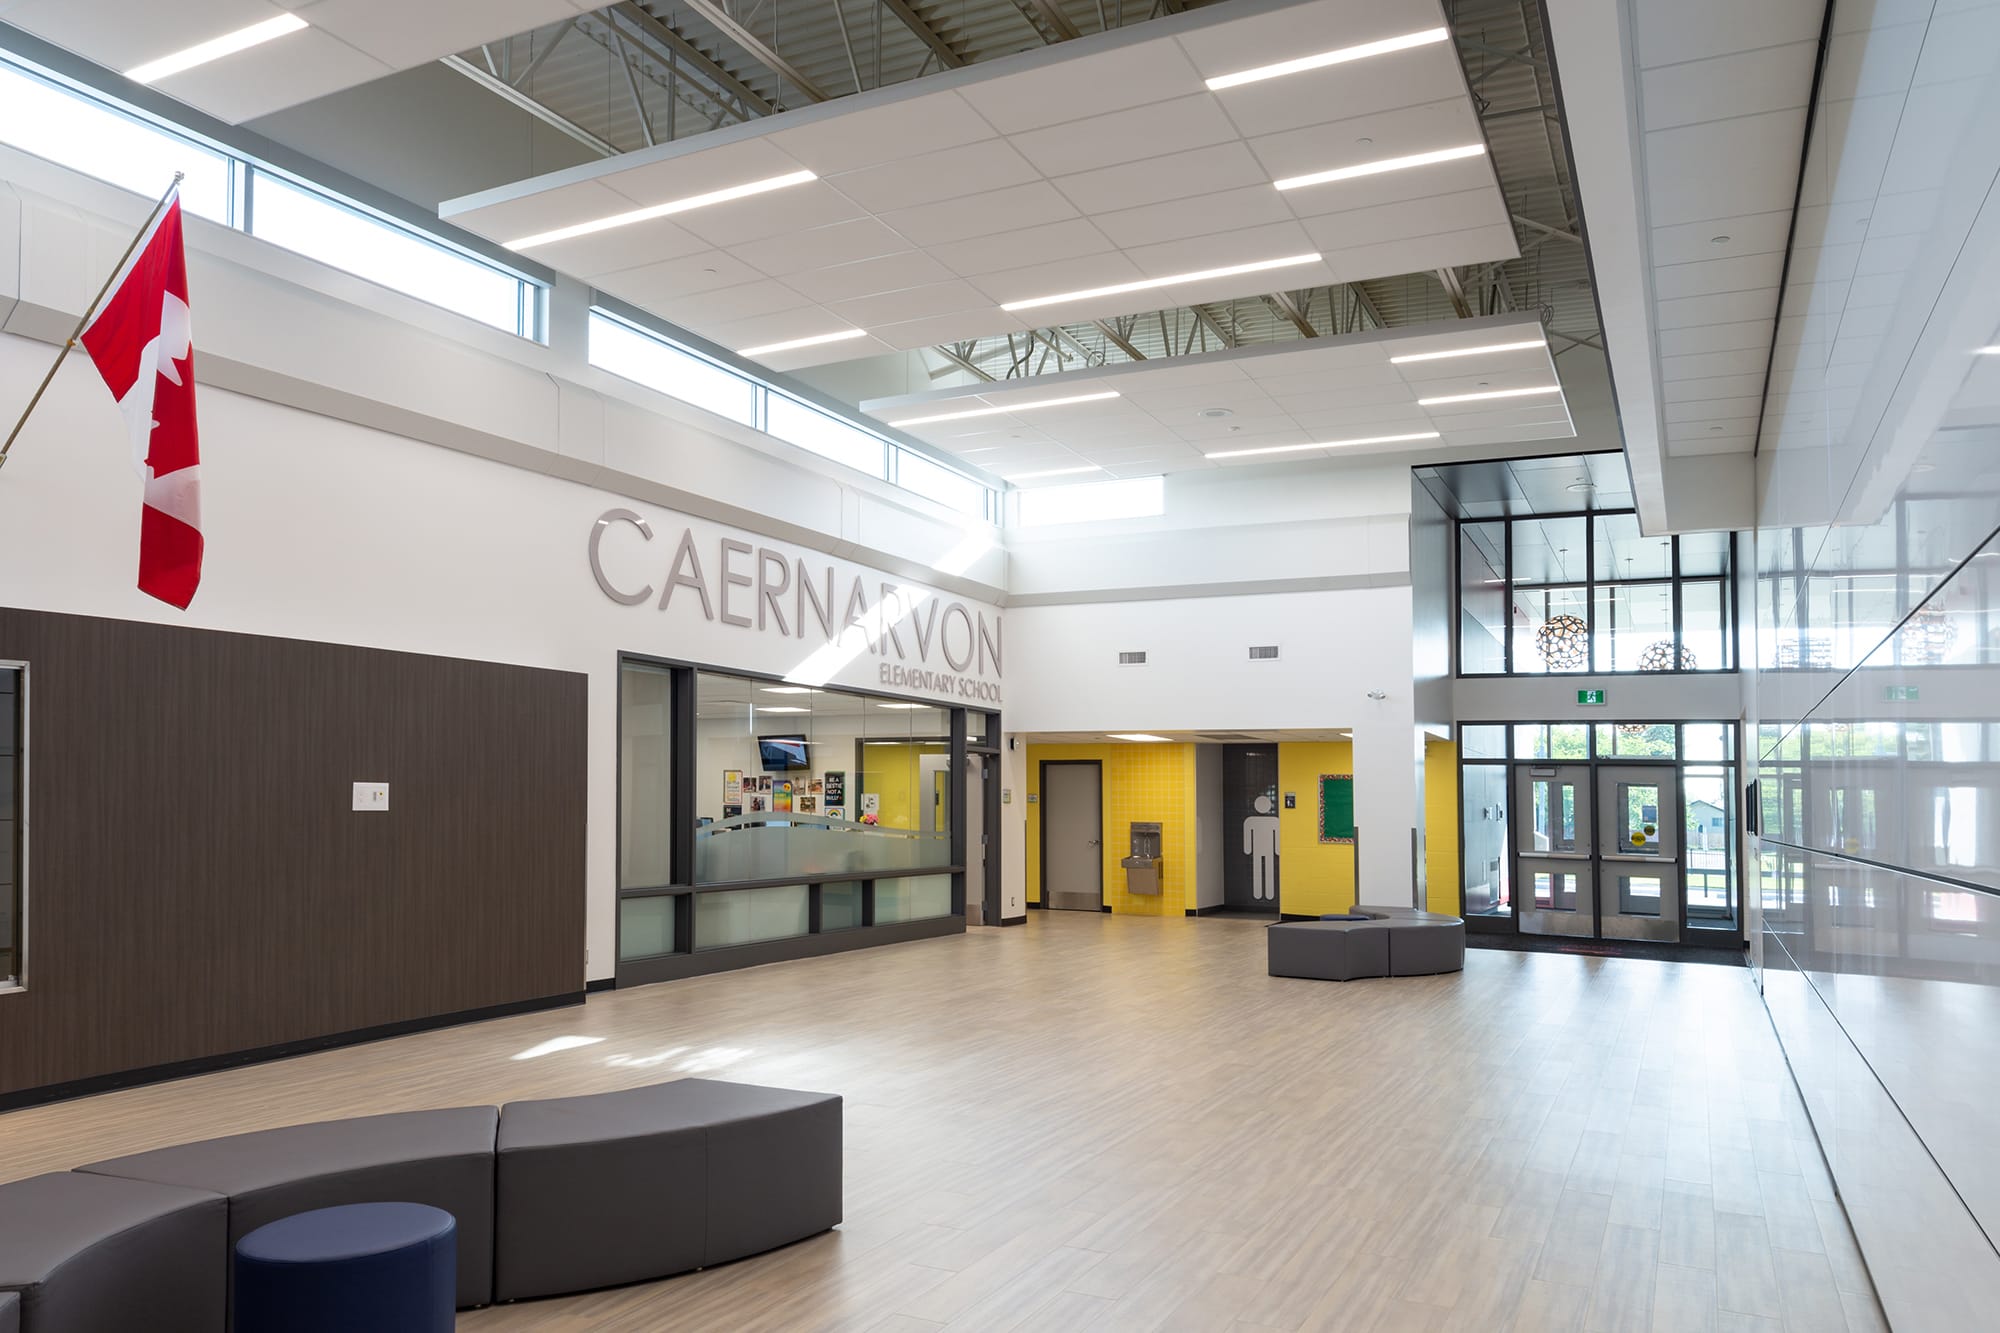 Caernarvon Elementary School entrance interior